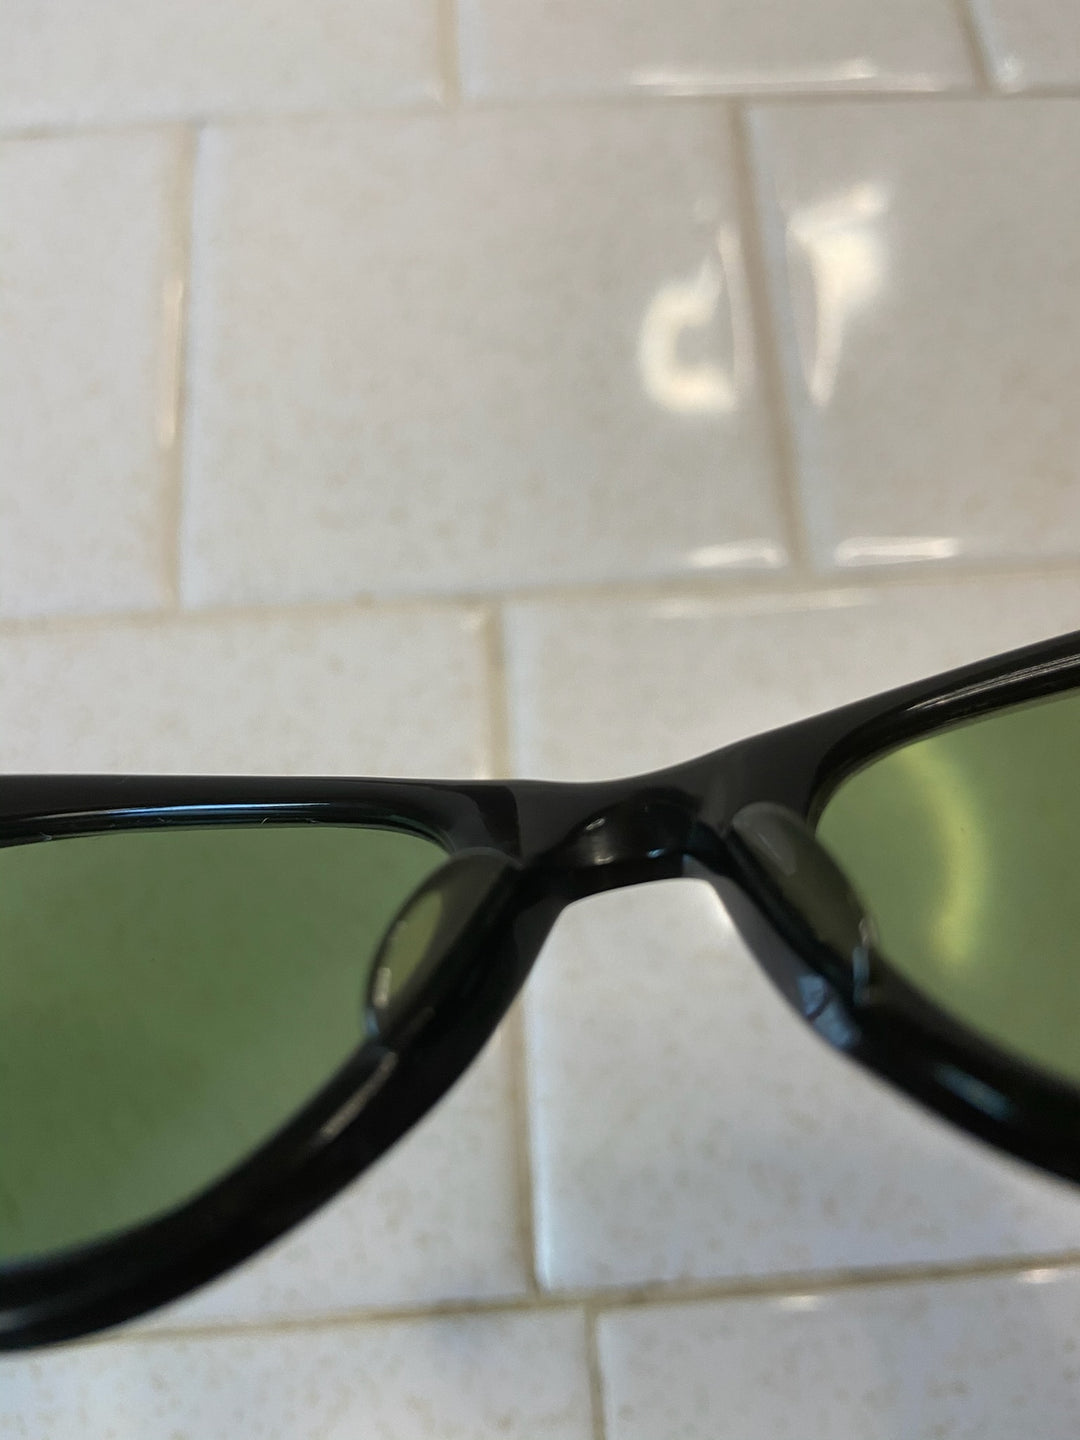 50s Black Cat Eye Marcell Sunnies Sunglasses, Ray Ban